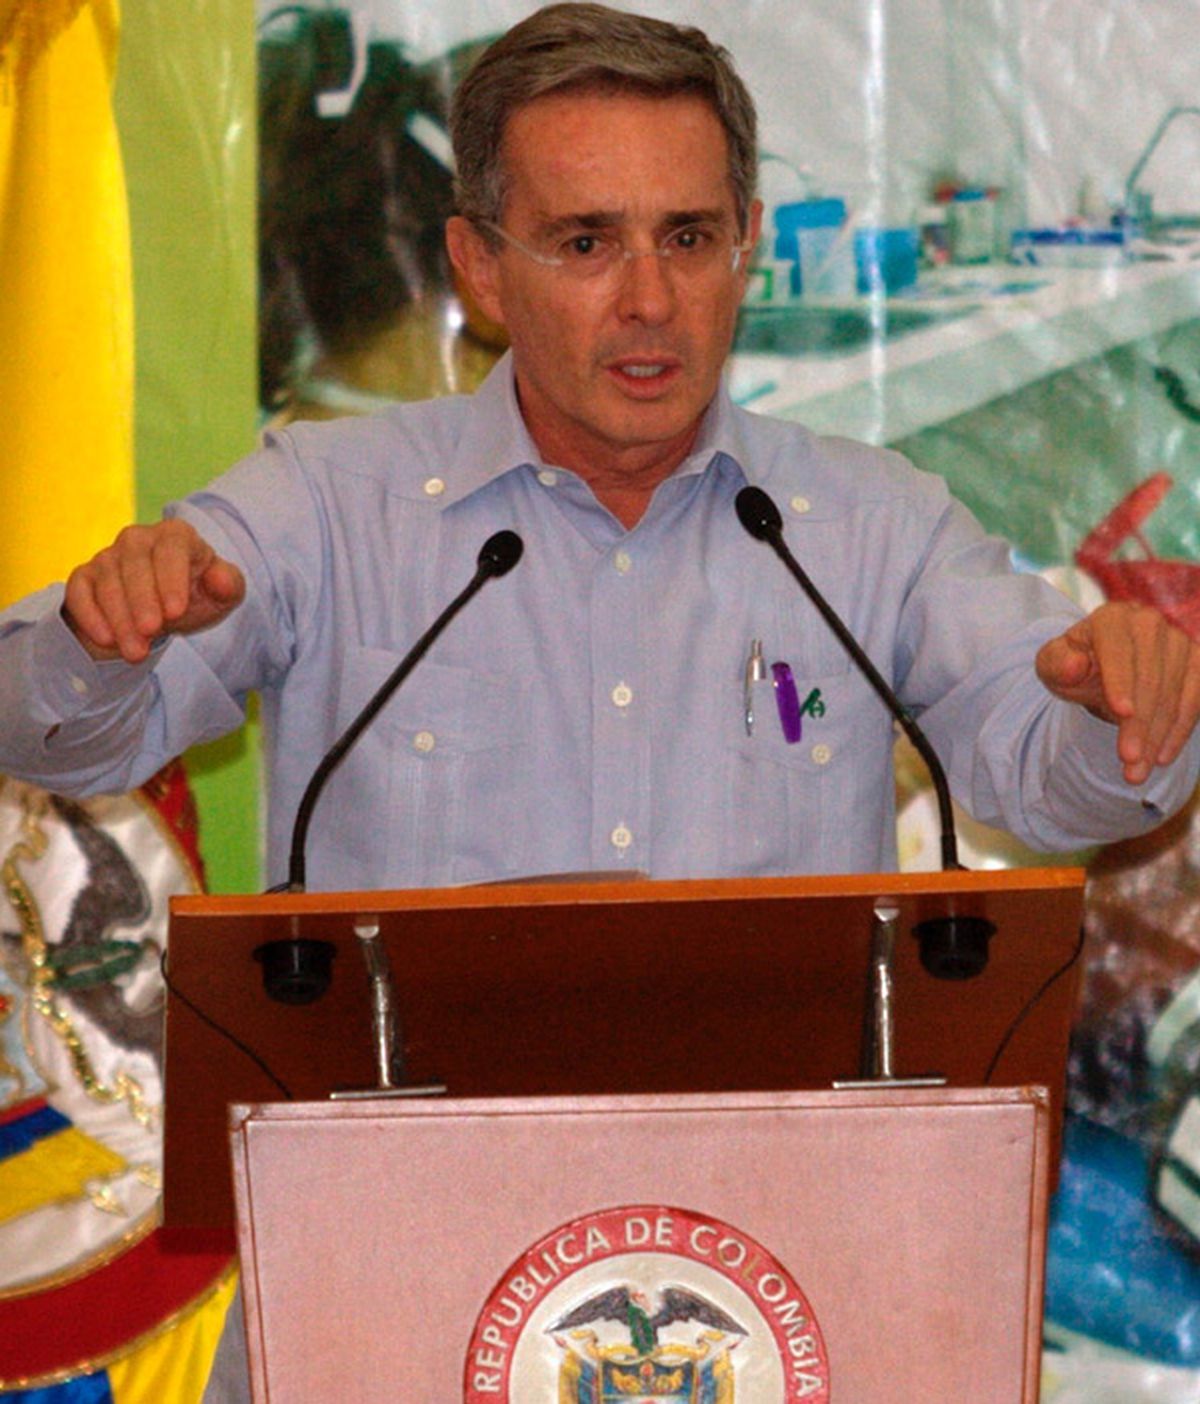 Alvaro Uribe